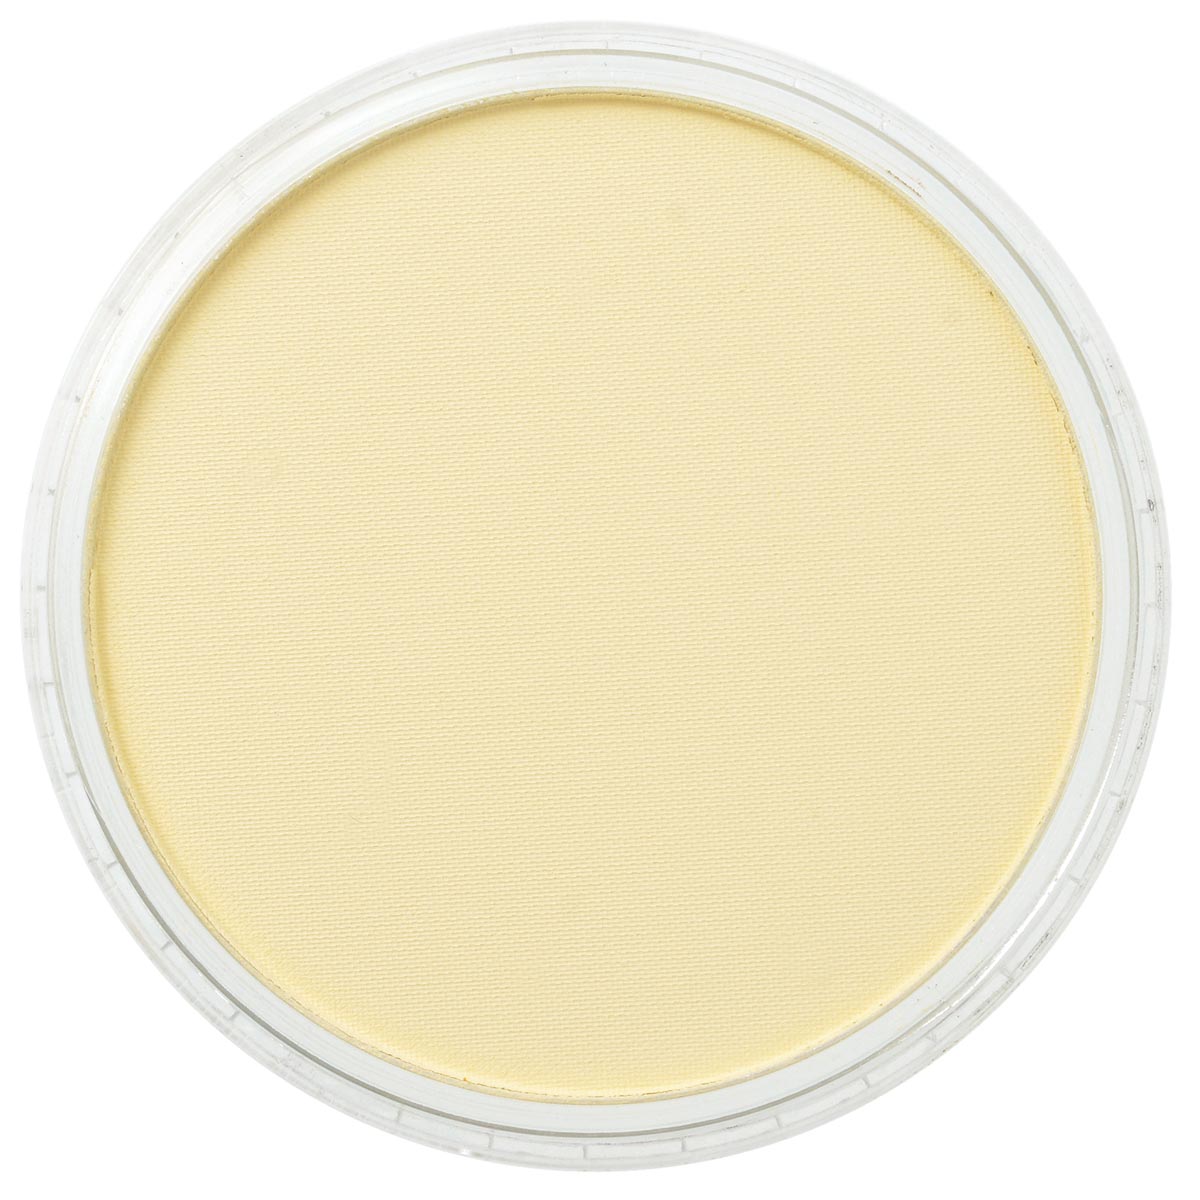 Pan Pastel Diarylide Yellow Tint 250.8